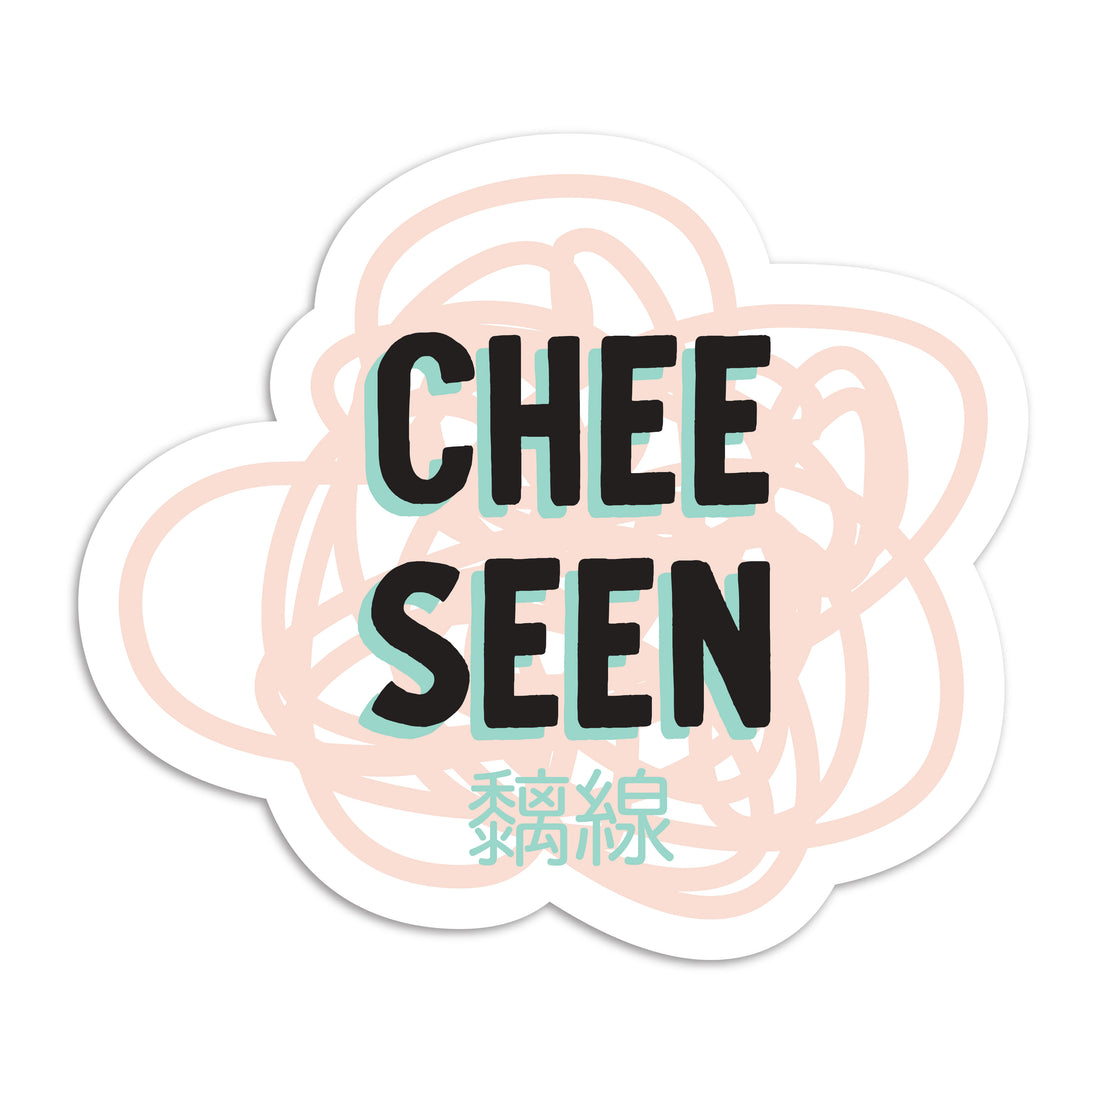 Chee seen (黐線) Cantonese vinyl sticker by I&